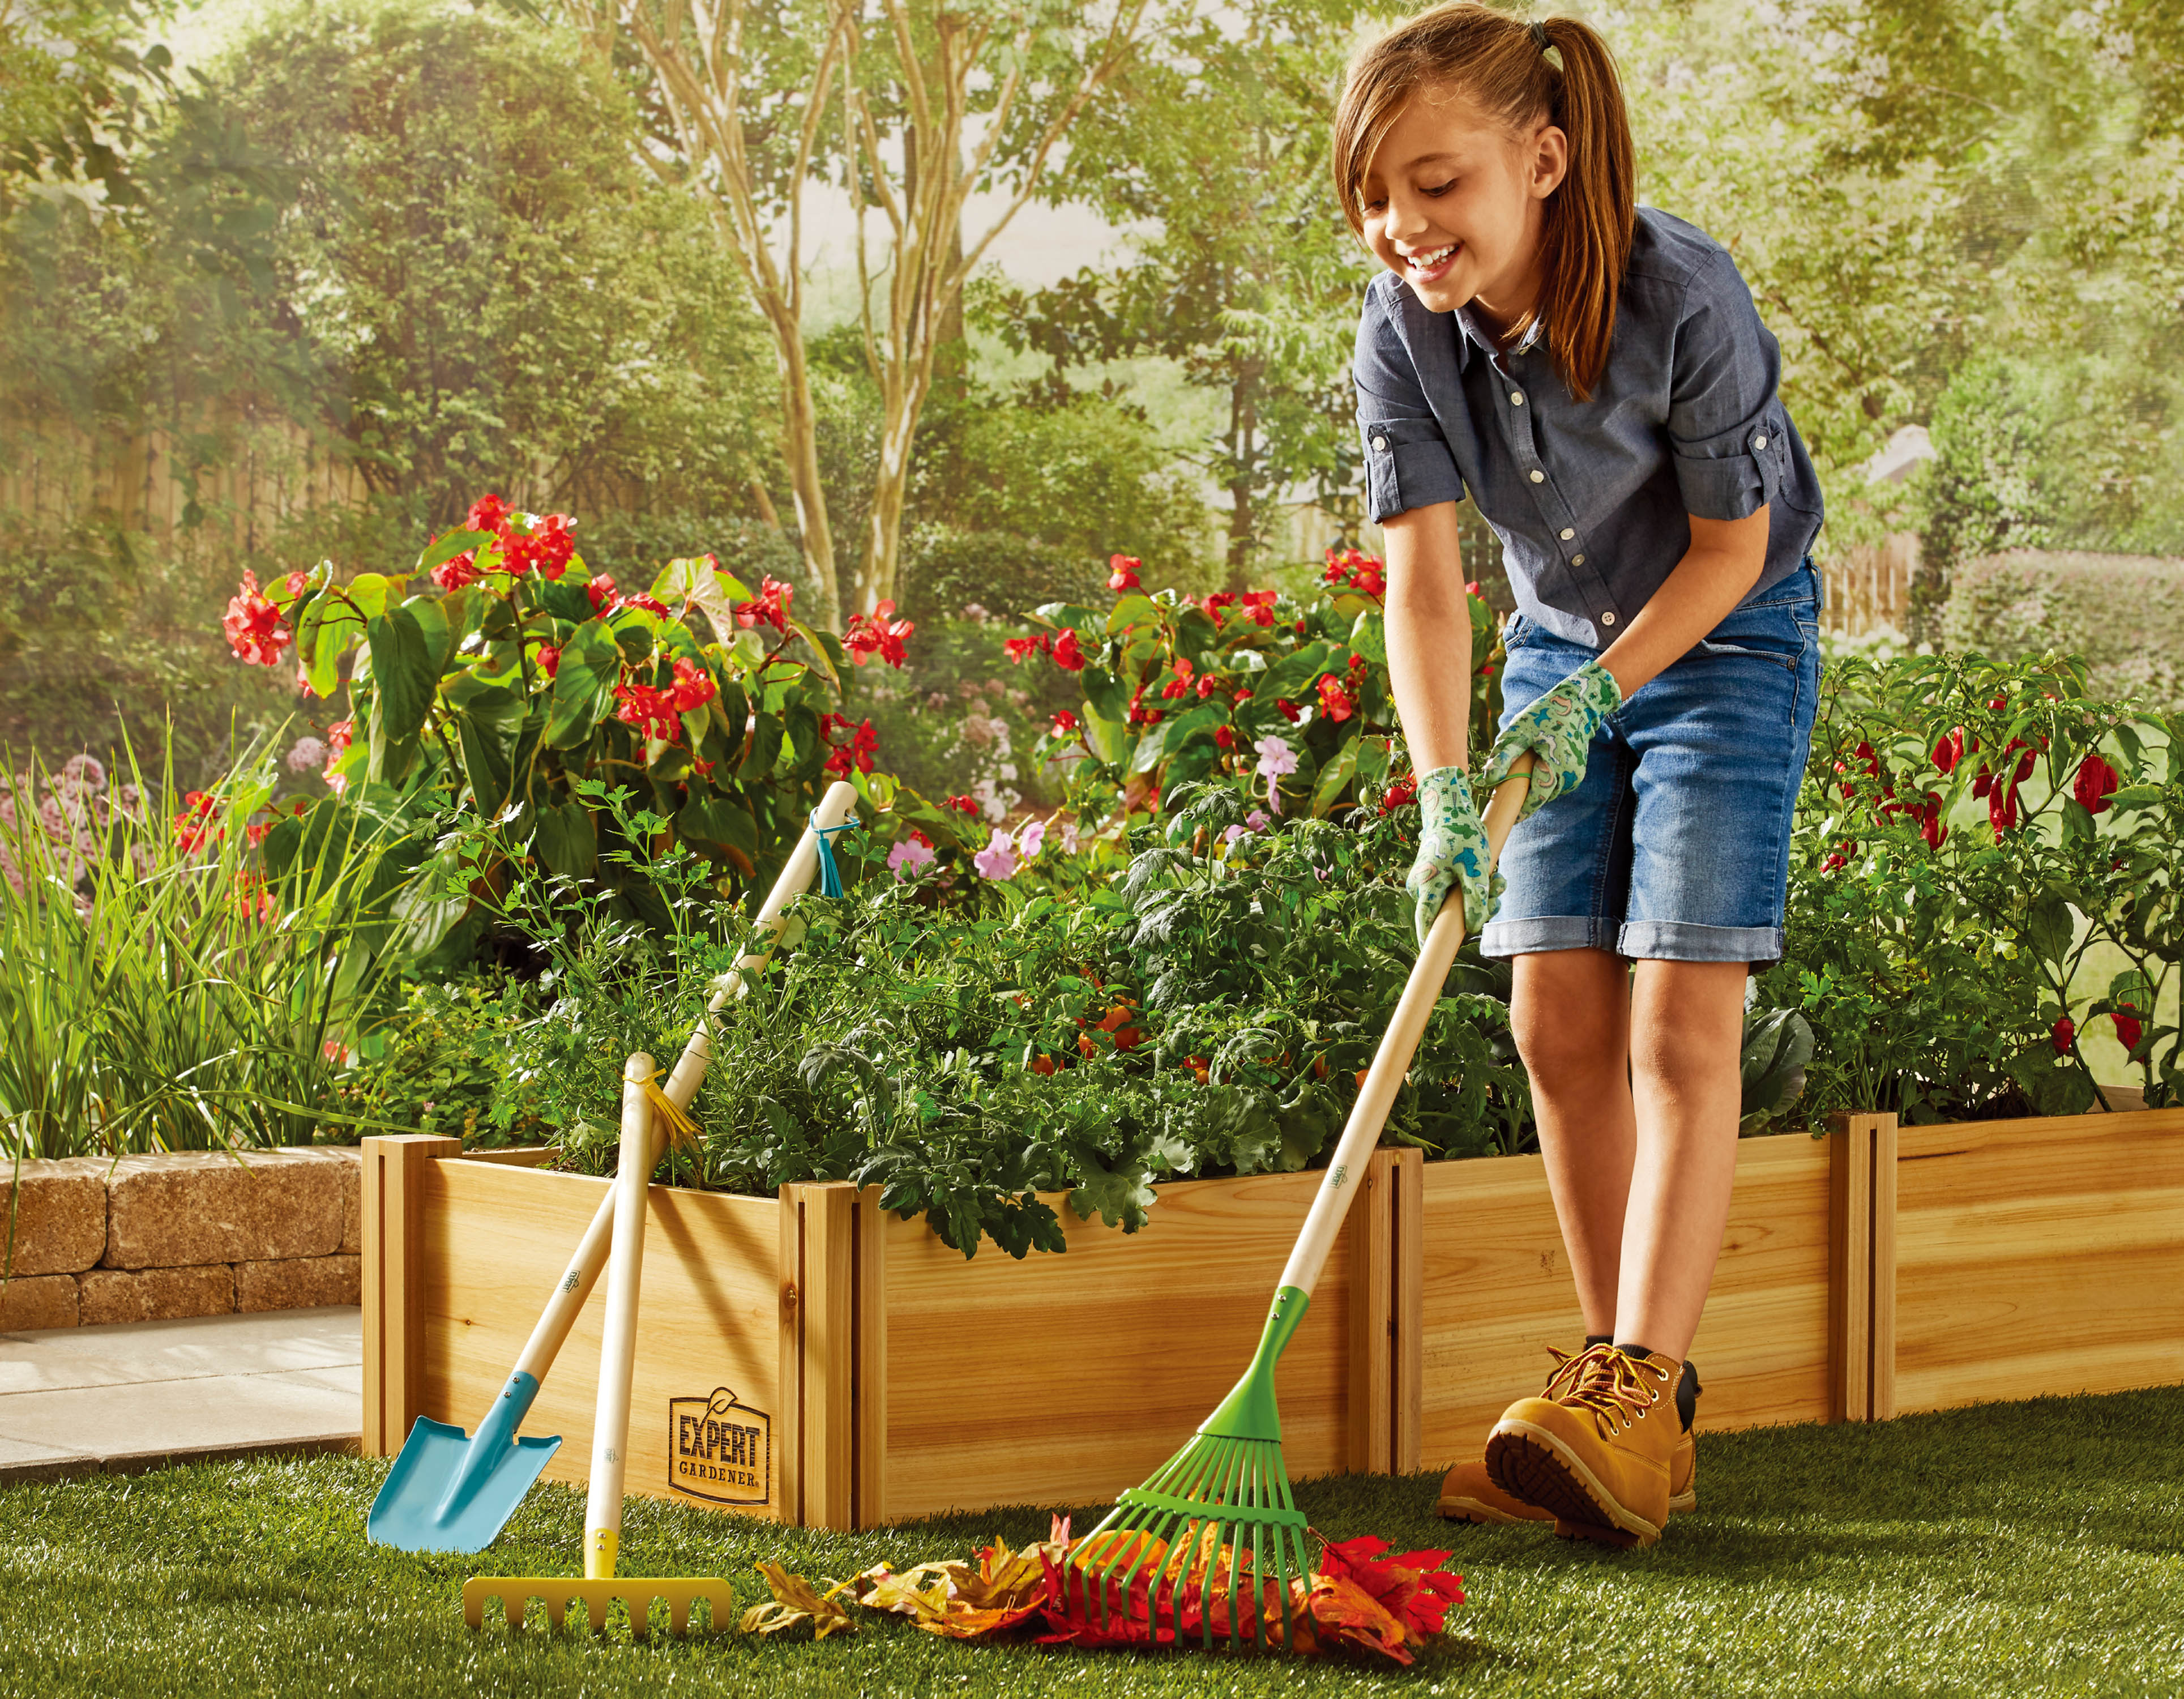 Expert Gardener Kids Gardening Tool Set, 3 Piece Set, 1 - image 2 of 5